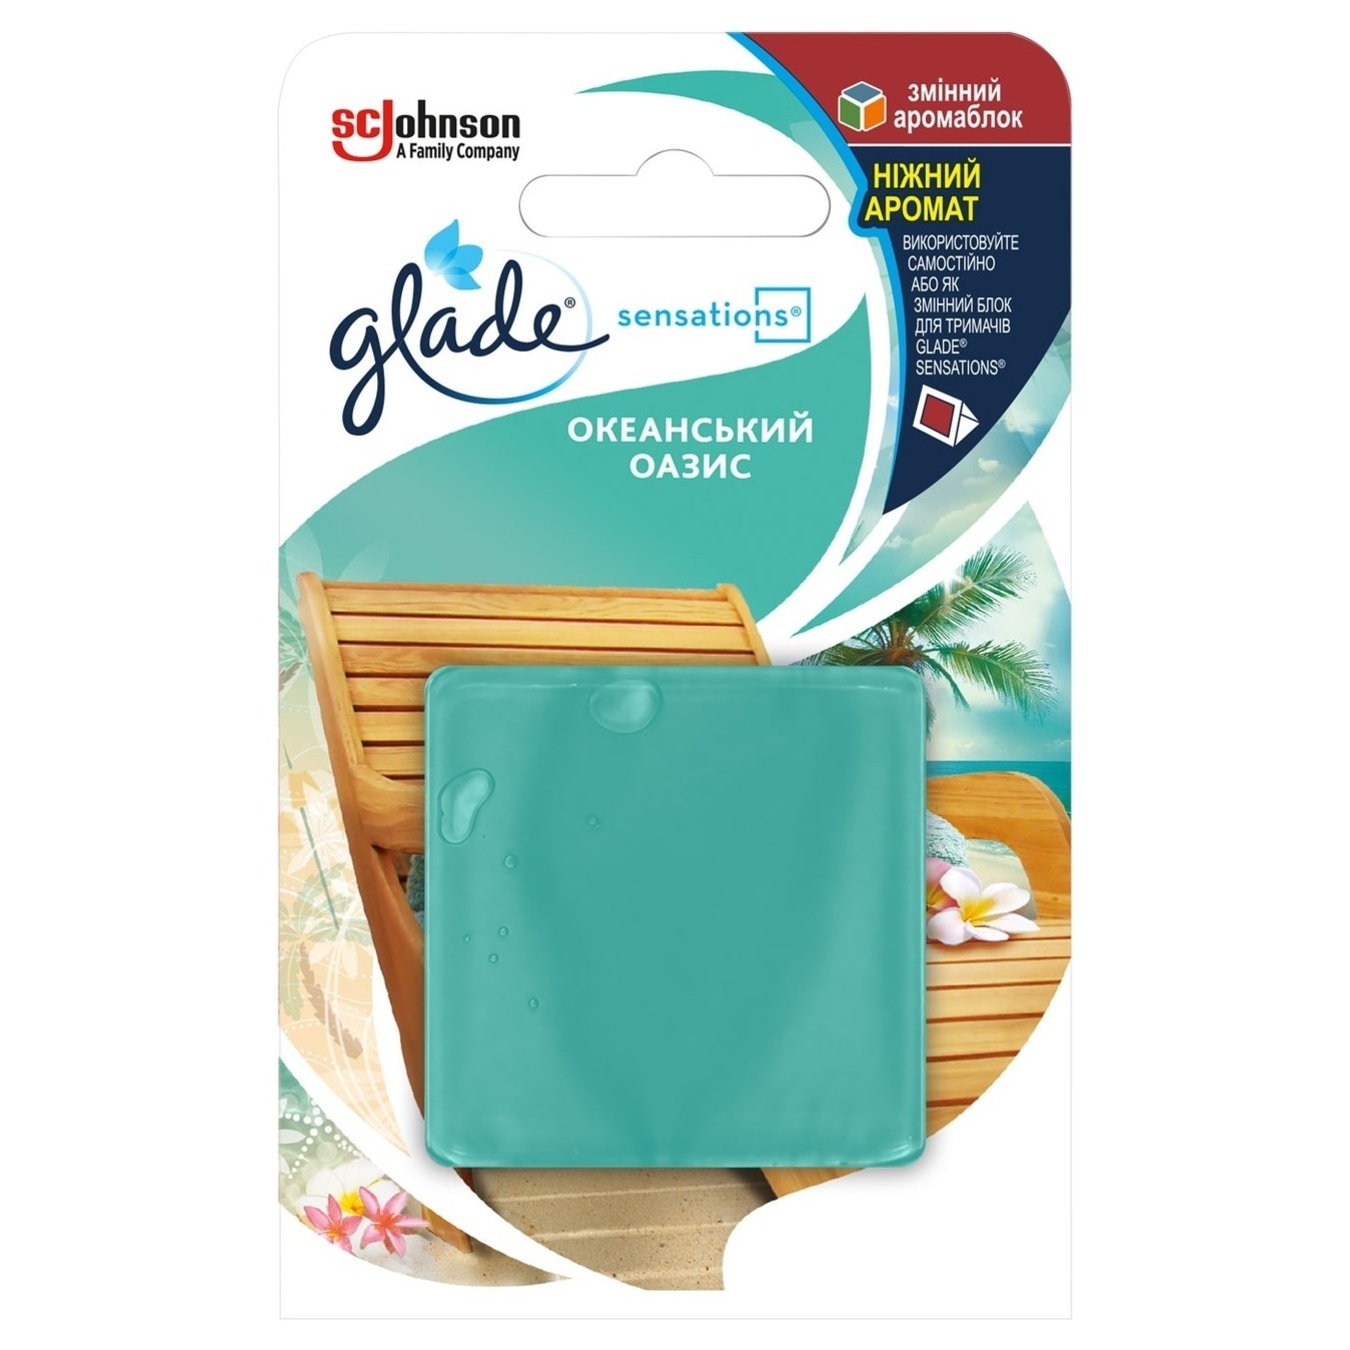 Air freshener Glade sensations Ocean oasis change block 8g